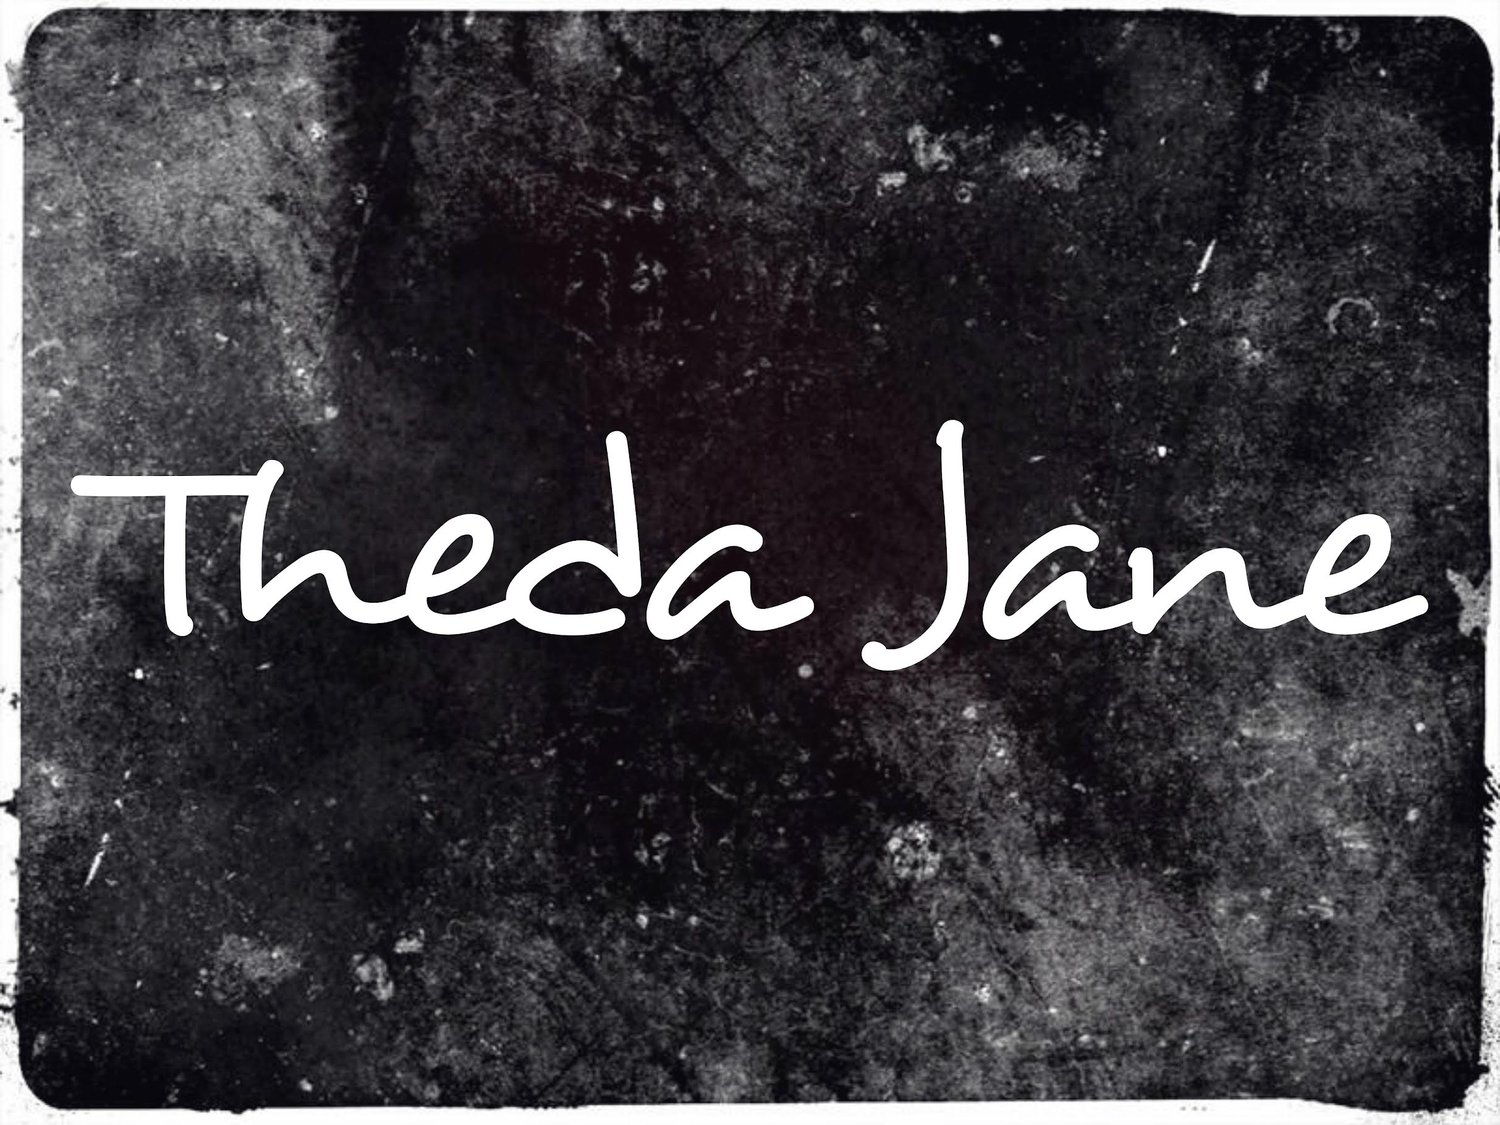 Theda Jane